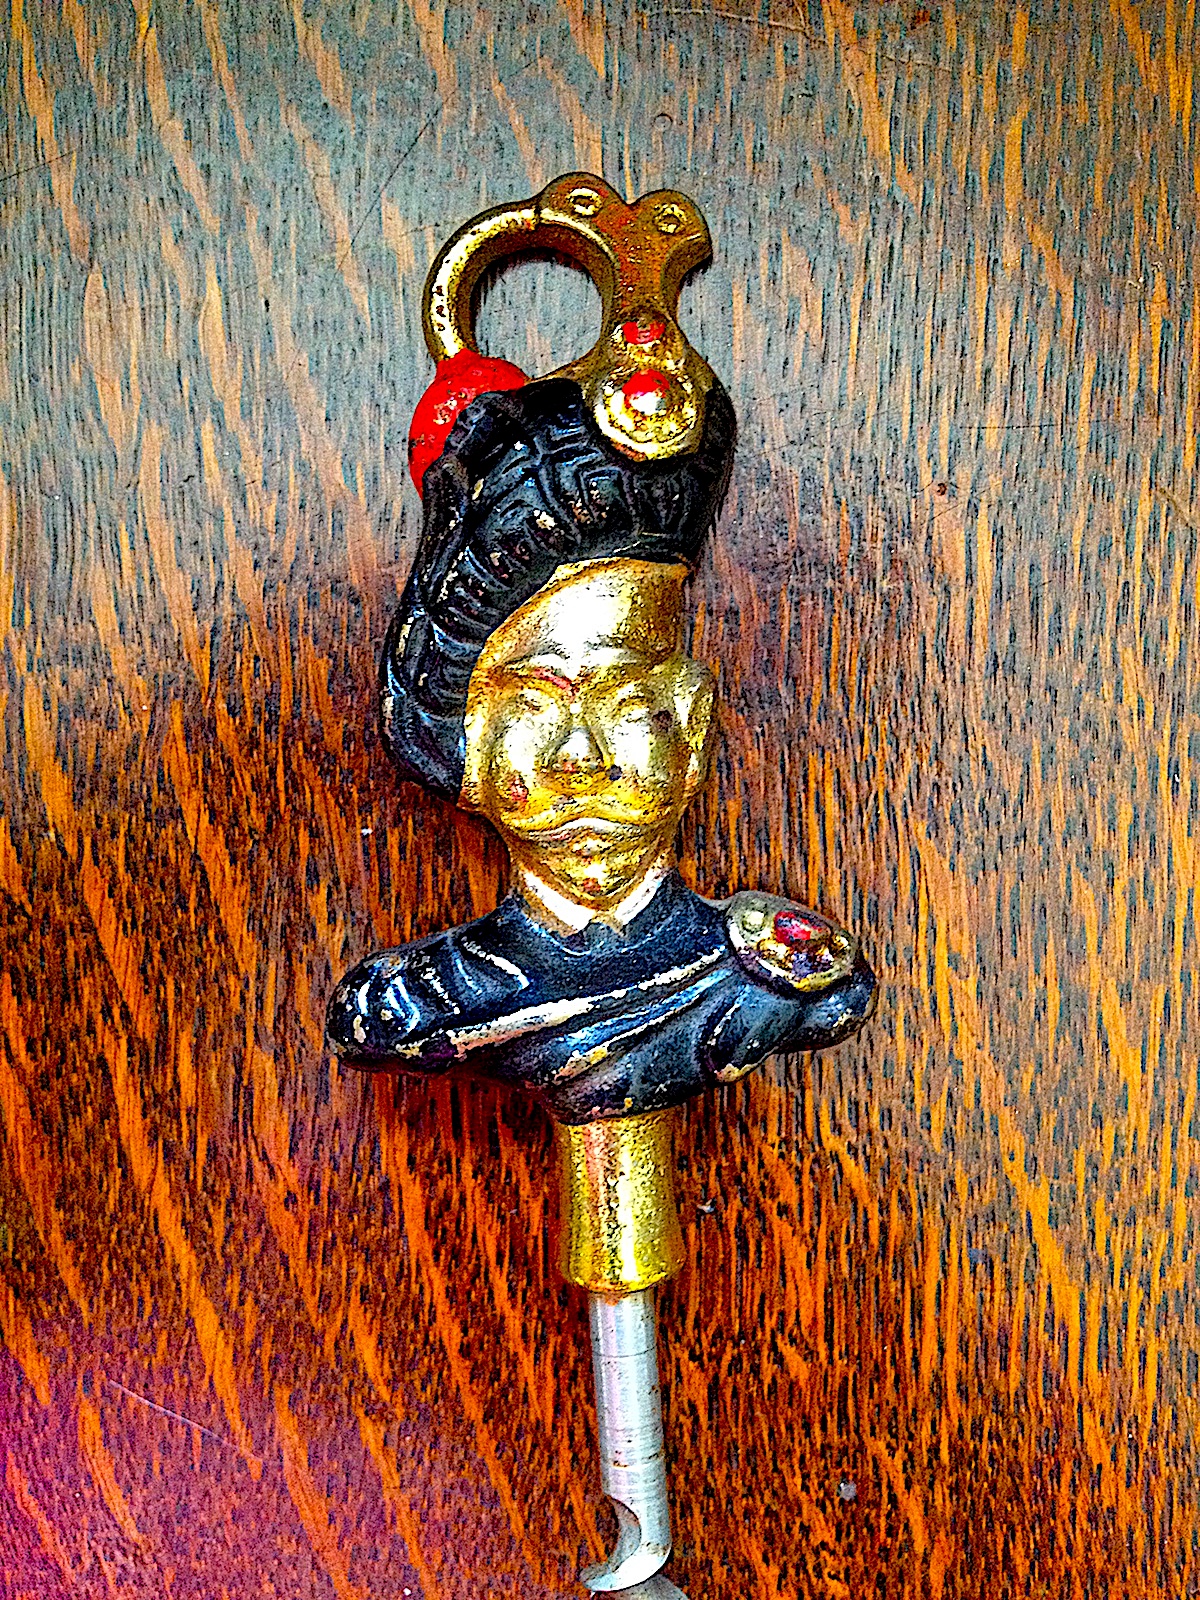 Rare Vintage brass corkscrews • Antiche Curiosità